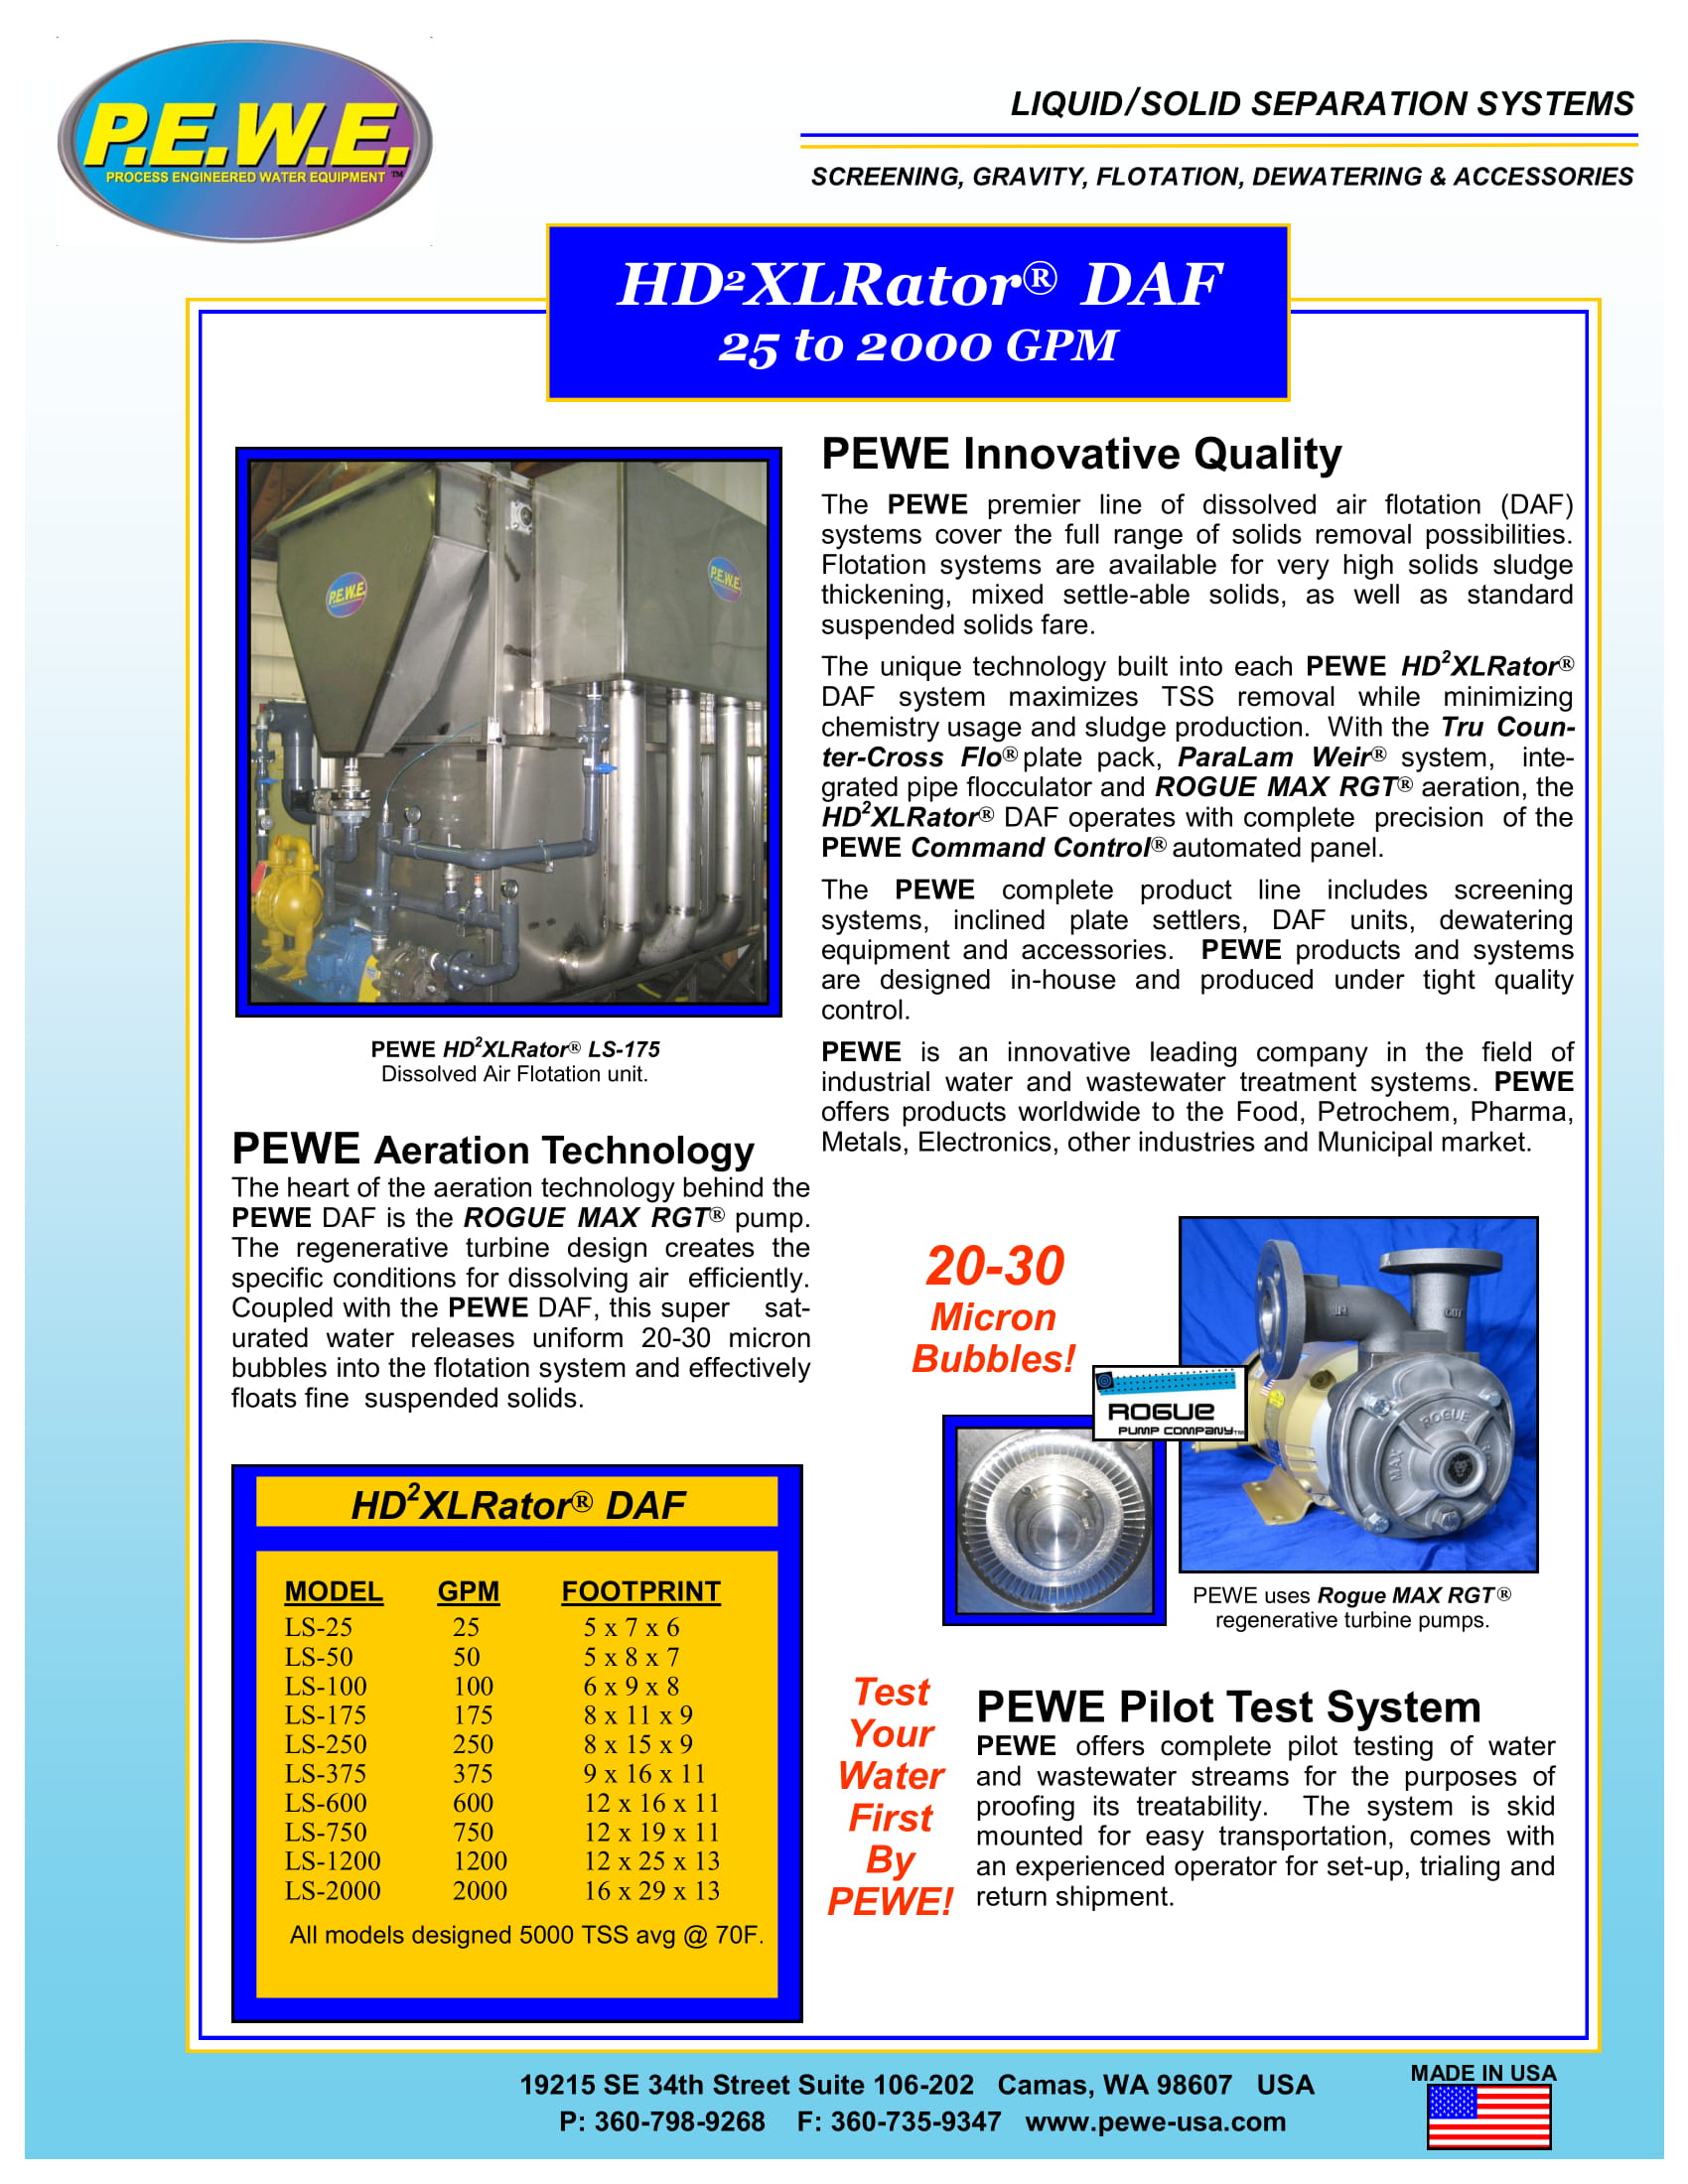 PEWE-HD-XLRator-DAF-Brochure-052019-1.jpg